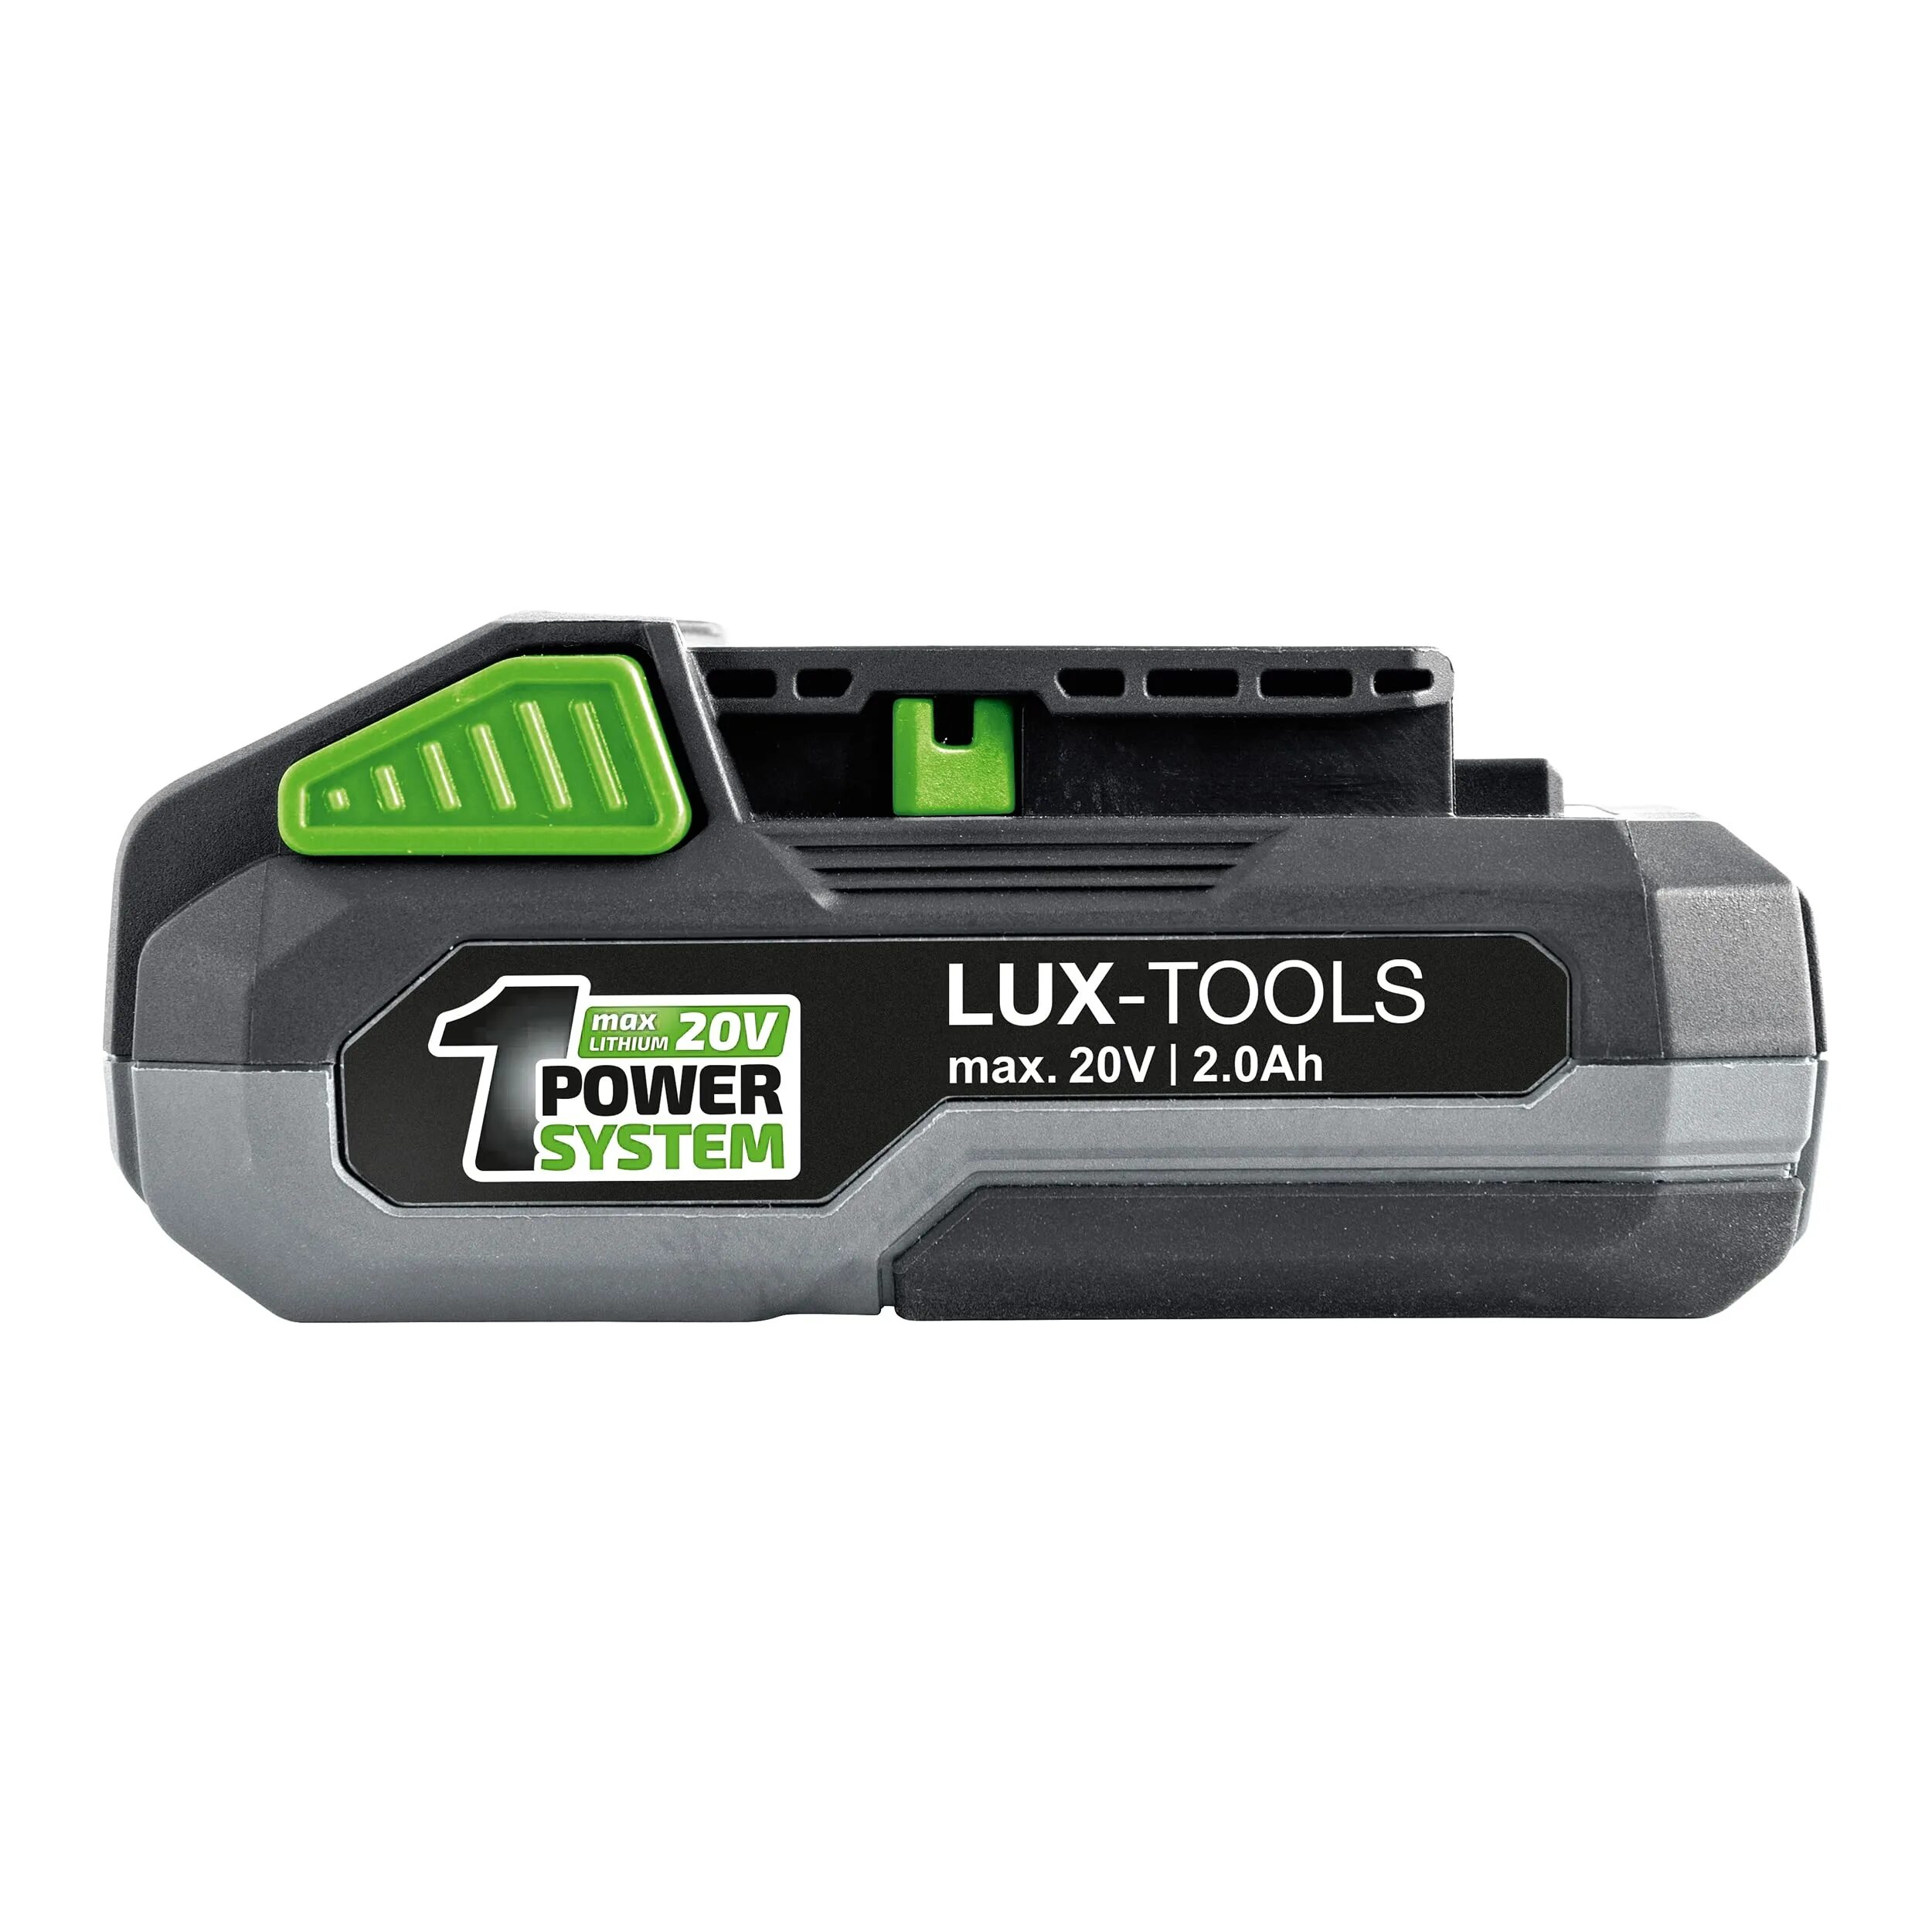 Battery tools. Аккумулятор Lux Tools 20v. Шуруповерт Lux Tools 20v аккумулятор. Аккумулятор Lux Tools 20v 2.0Ah. Аккумулятор Lux-Tools 20v Obi.